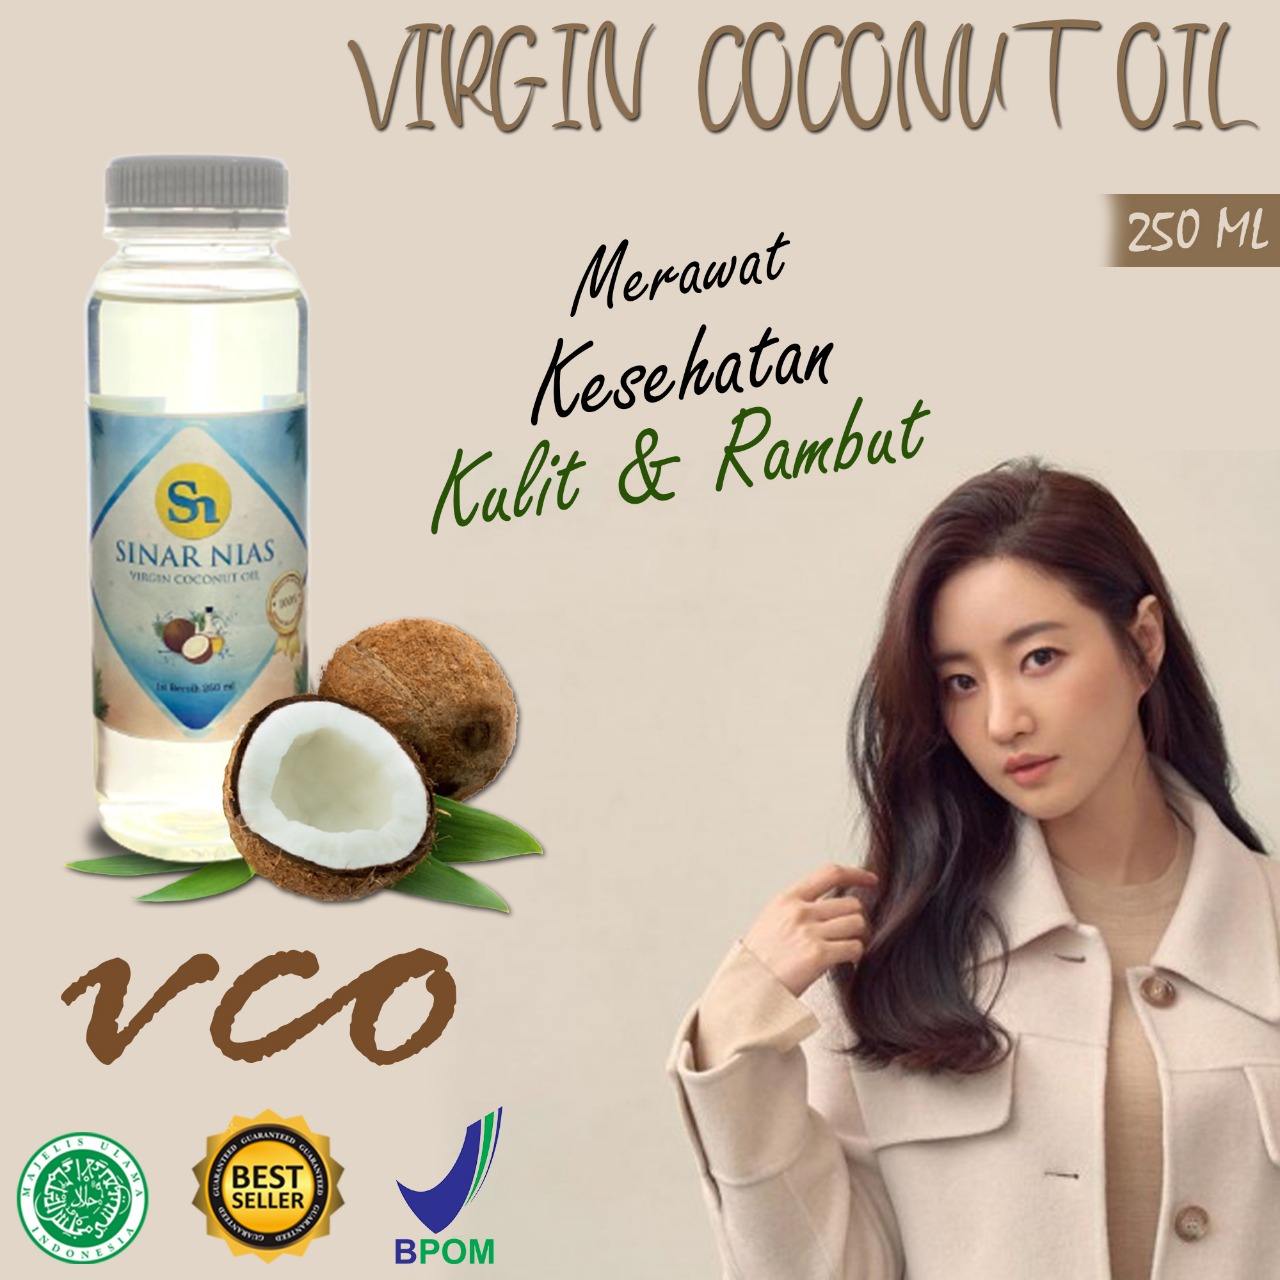 Virgin Coconut Oil 250 ml